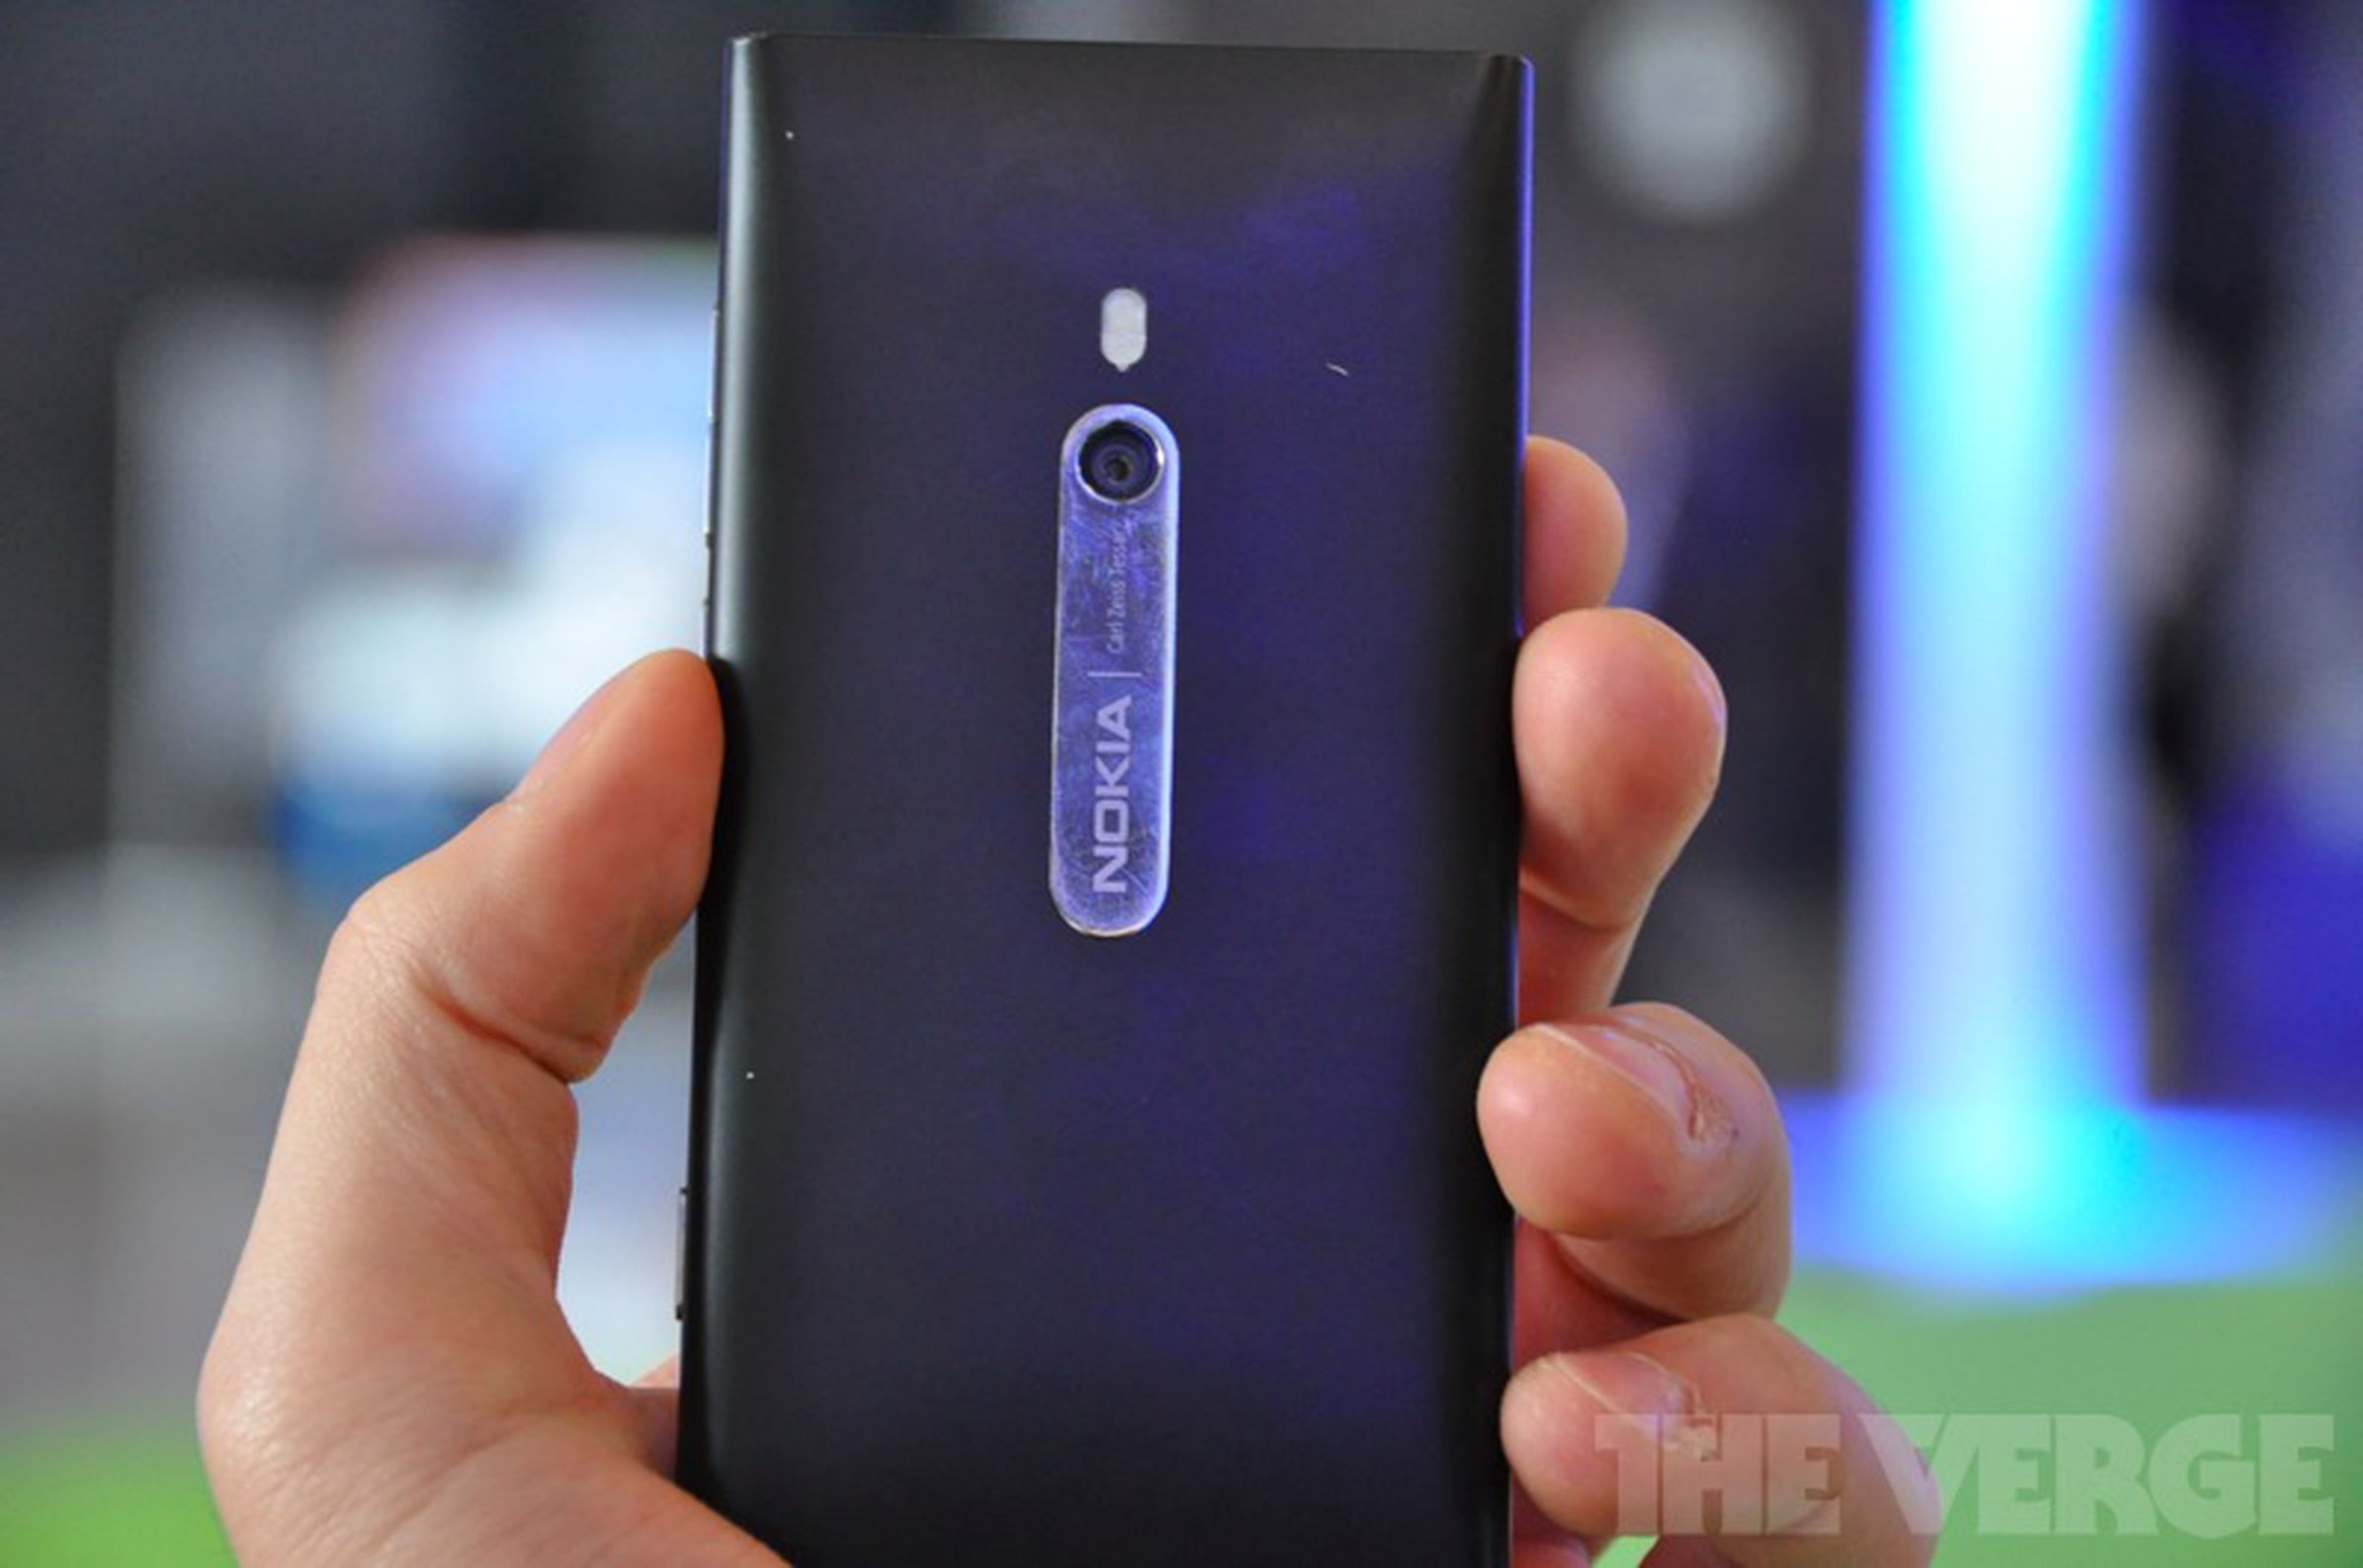     Nokia Lumia 800 Windows Phone hands on photos  